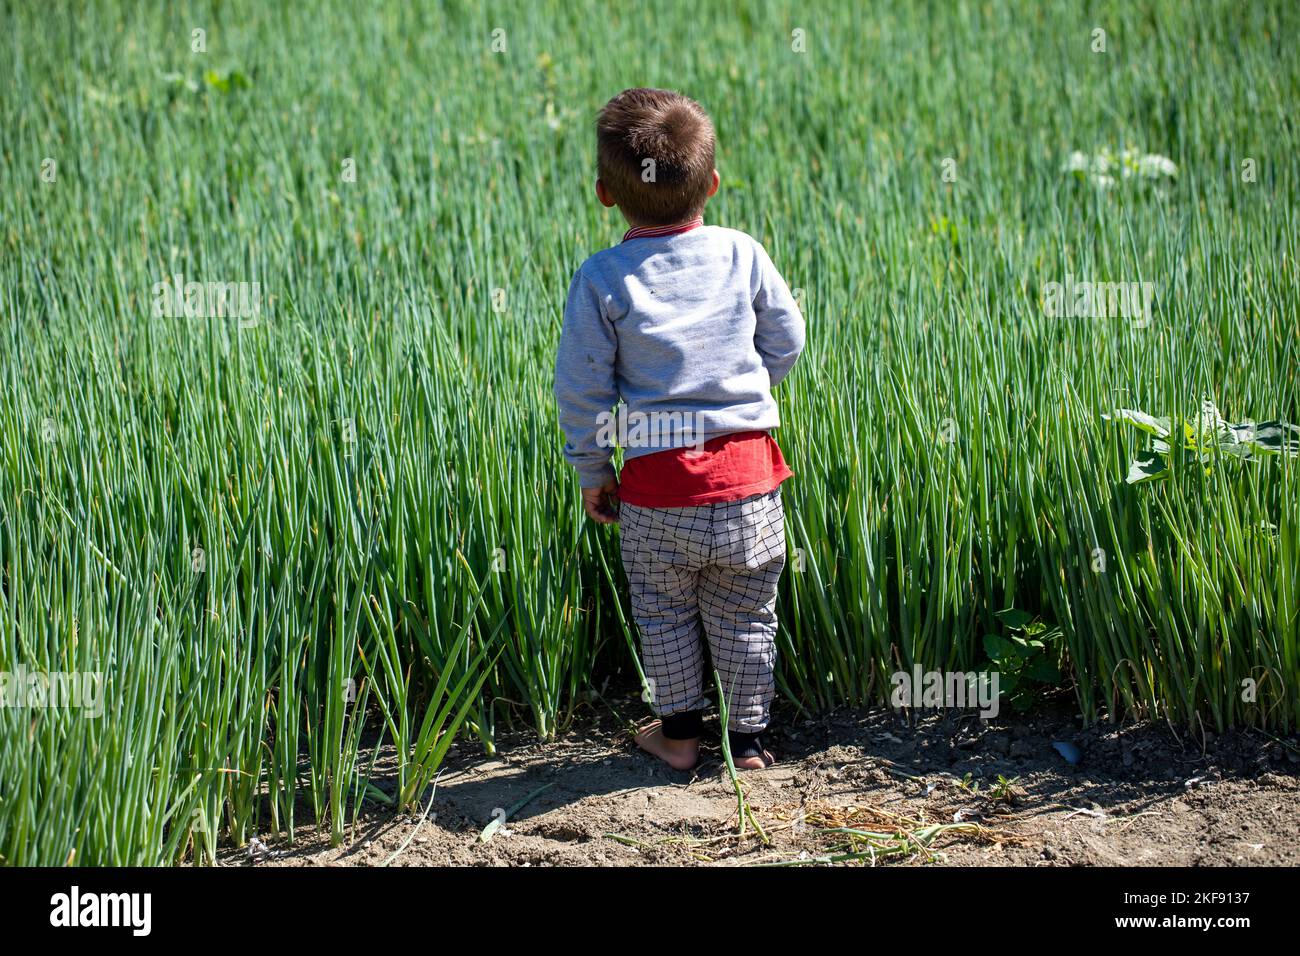 child worker working on scallion plantation, harvesting organic vegetables Stock Photo